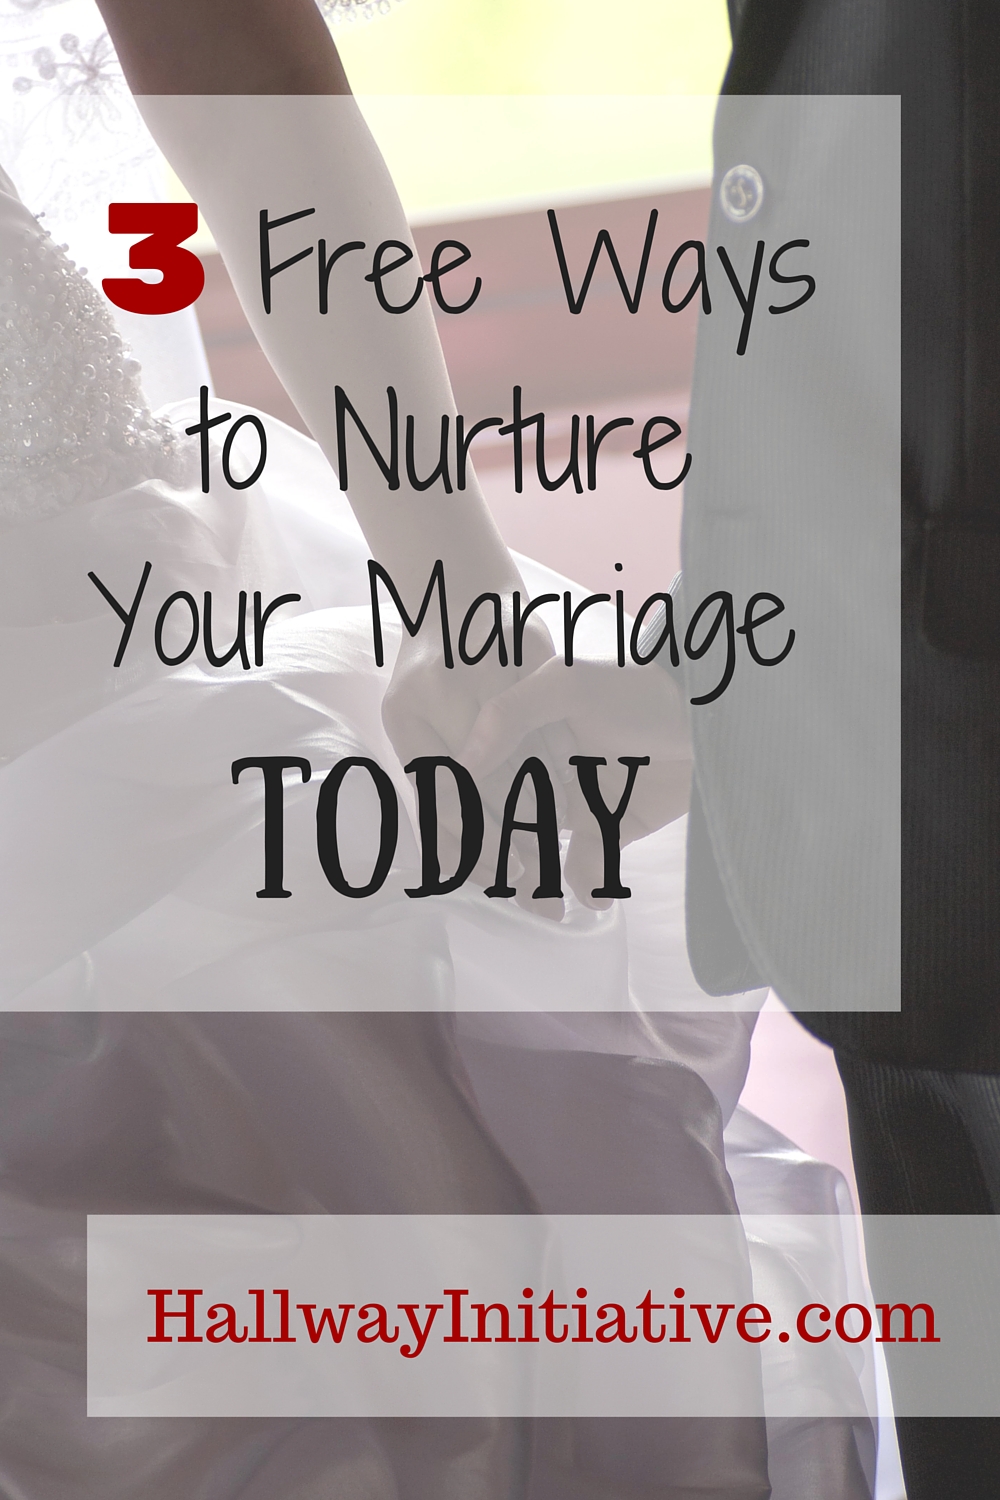 3 free ways to nurture your marriage today